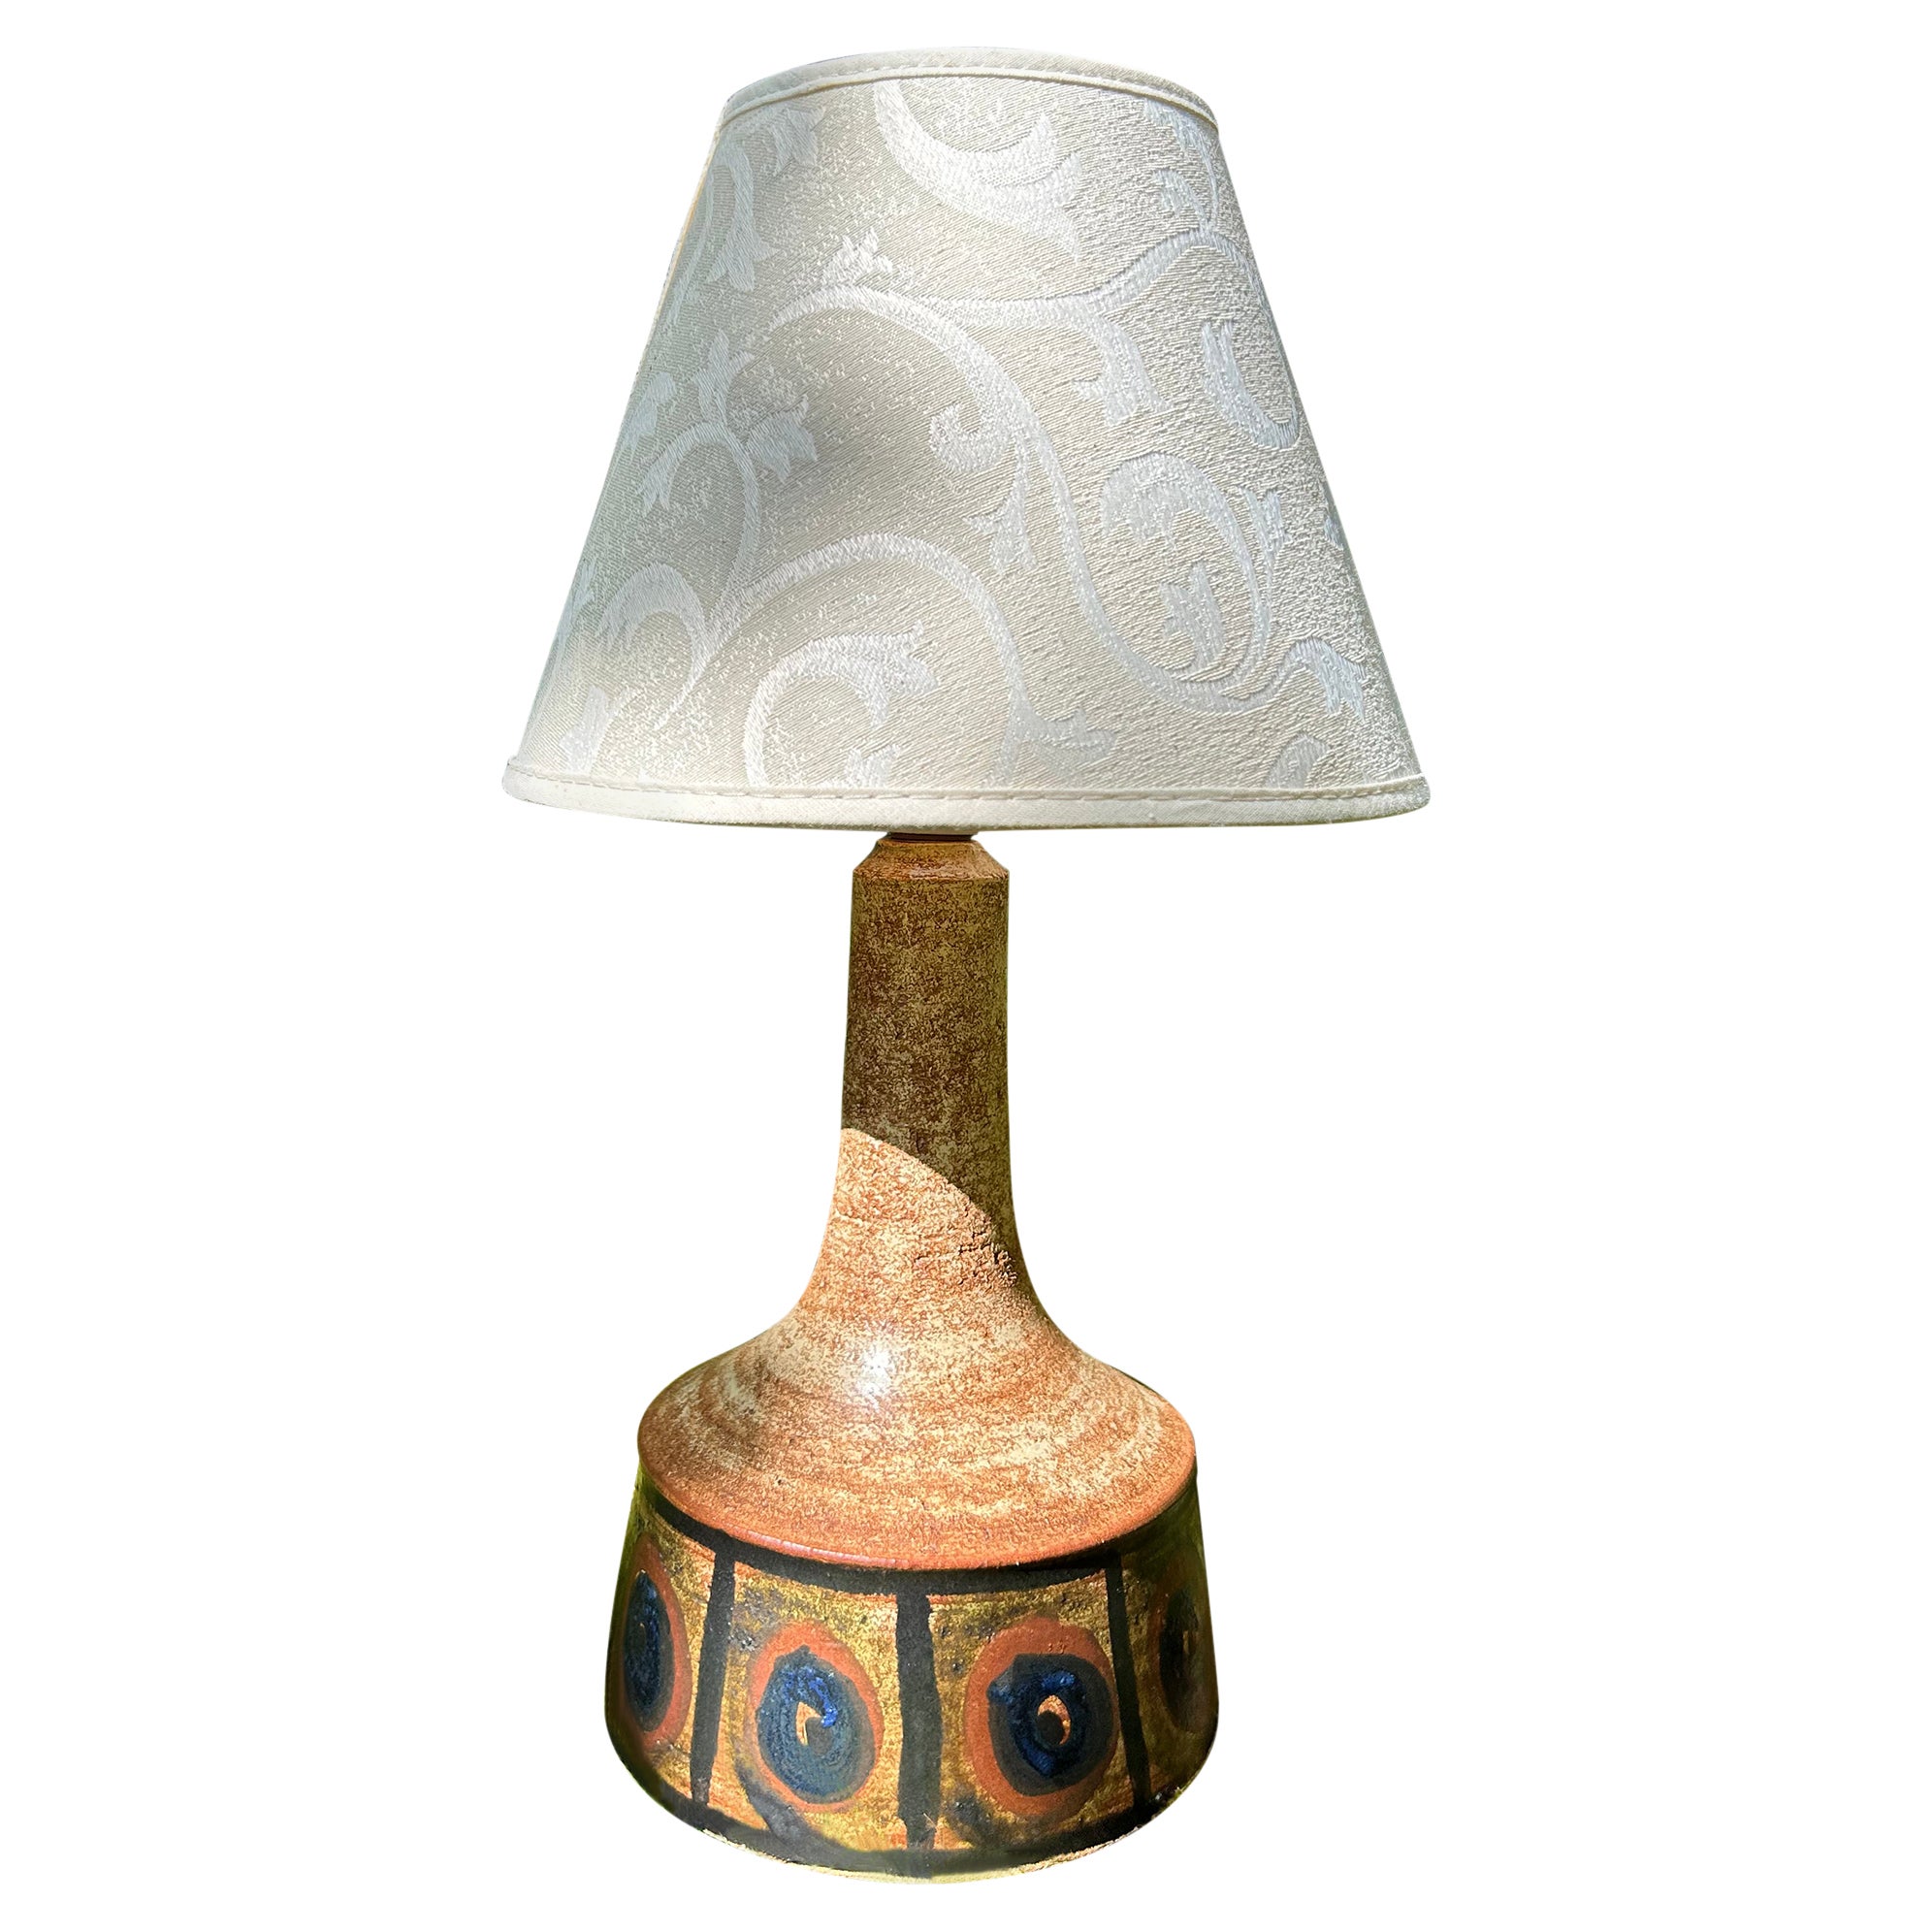 Danish ceramic table lamp by Axella